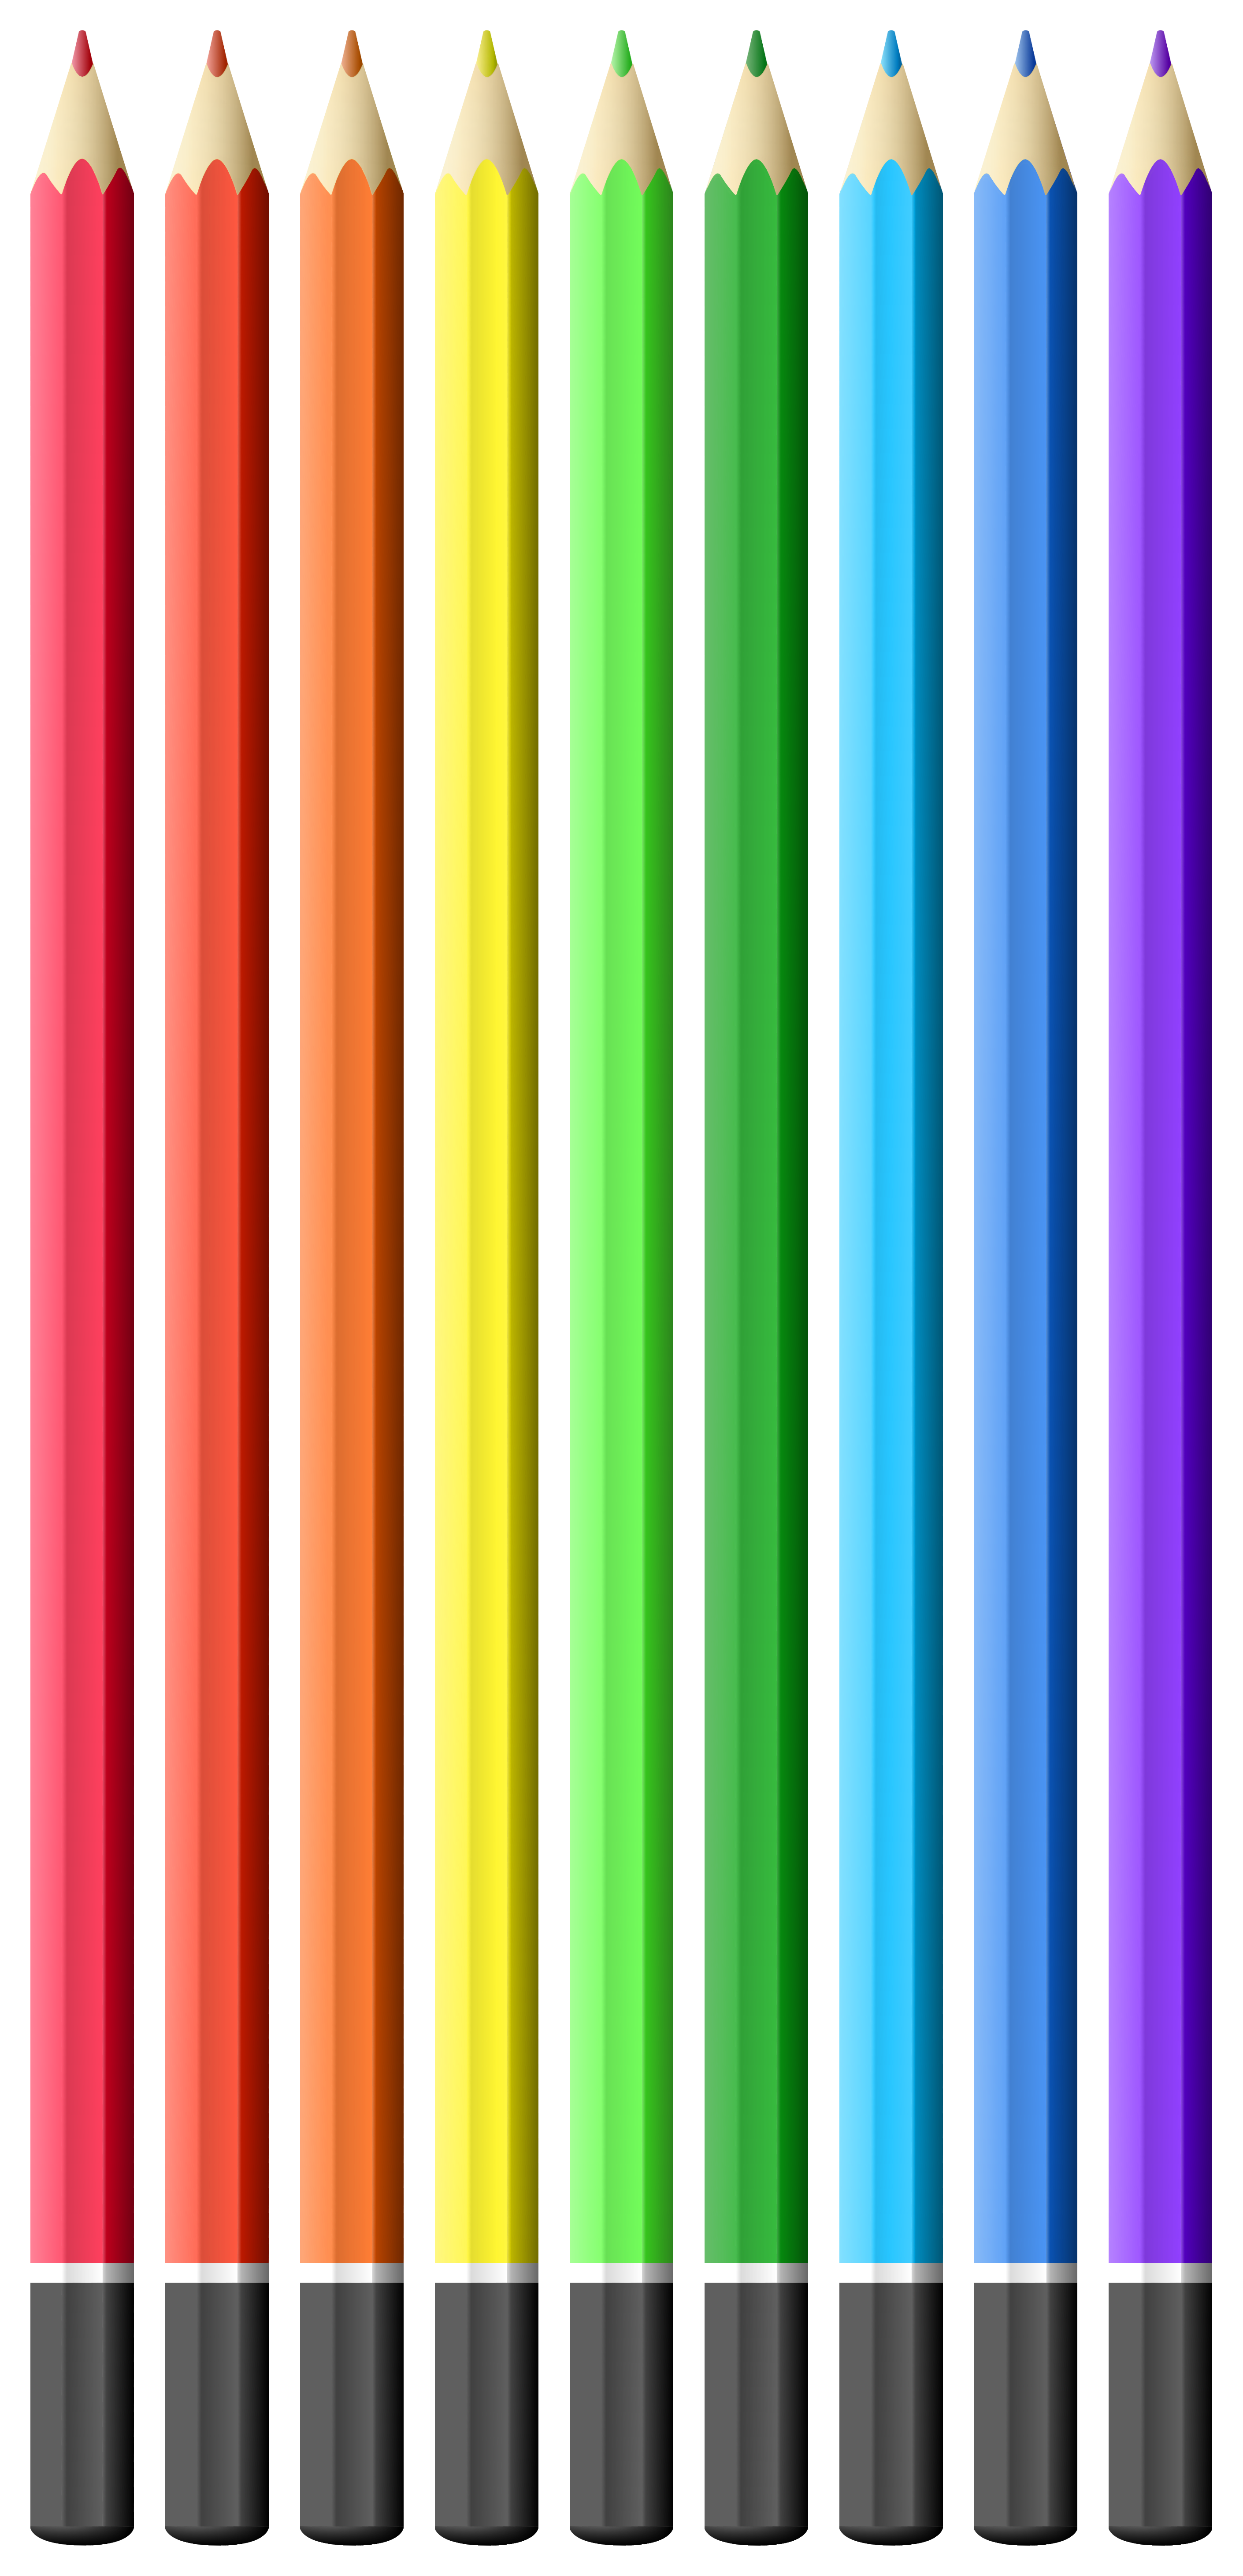 Colored Pencils PNG Clip Art - Best WEB Clipart